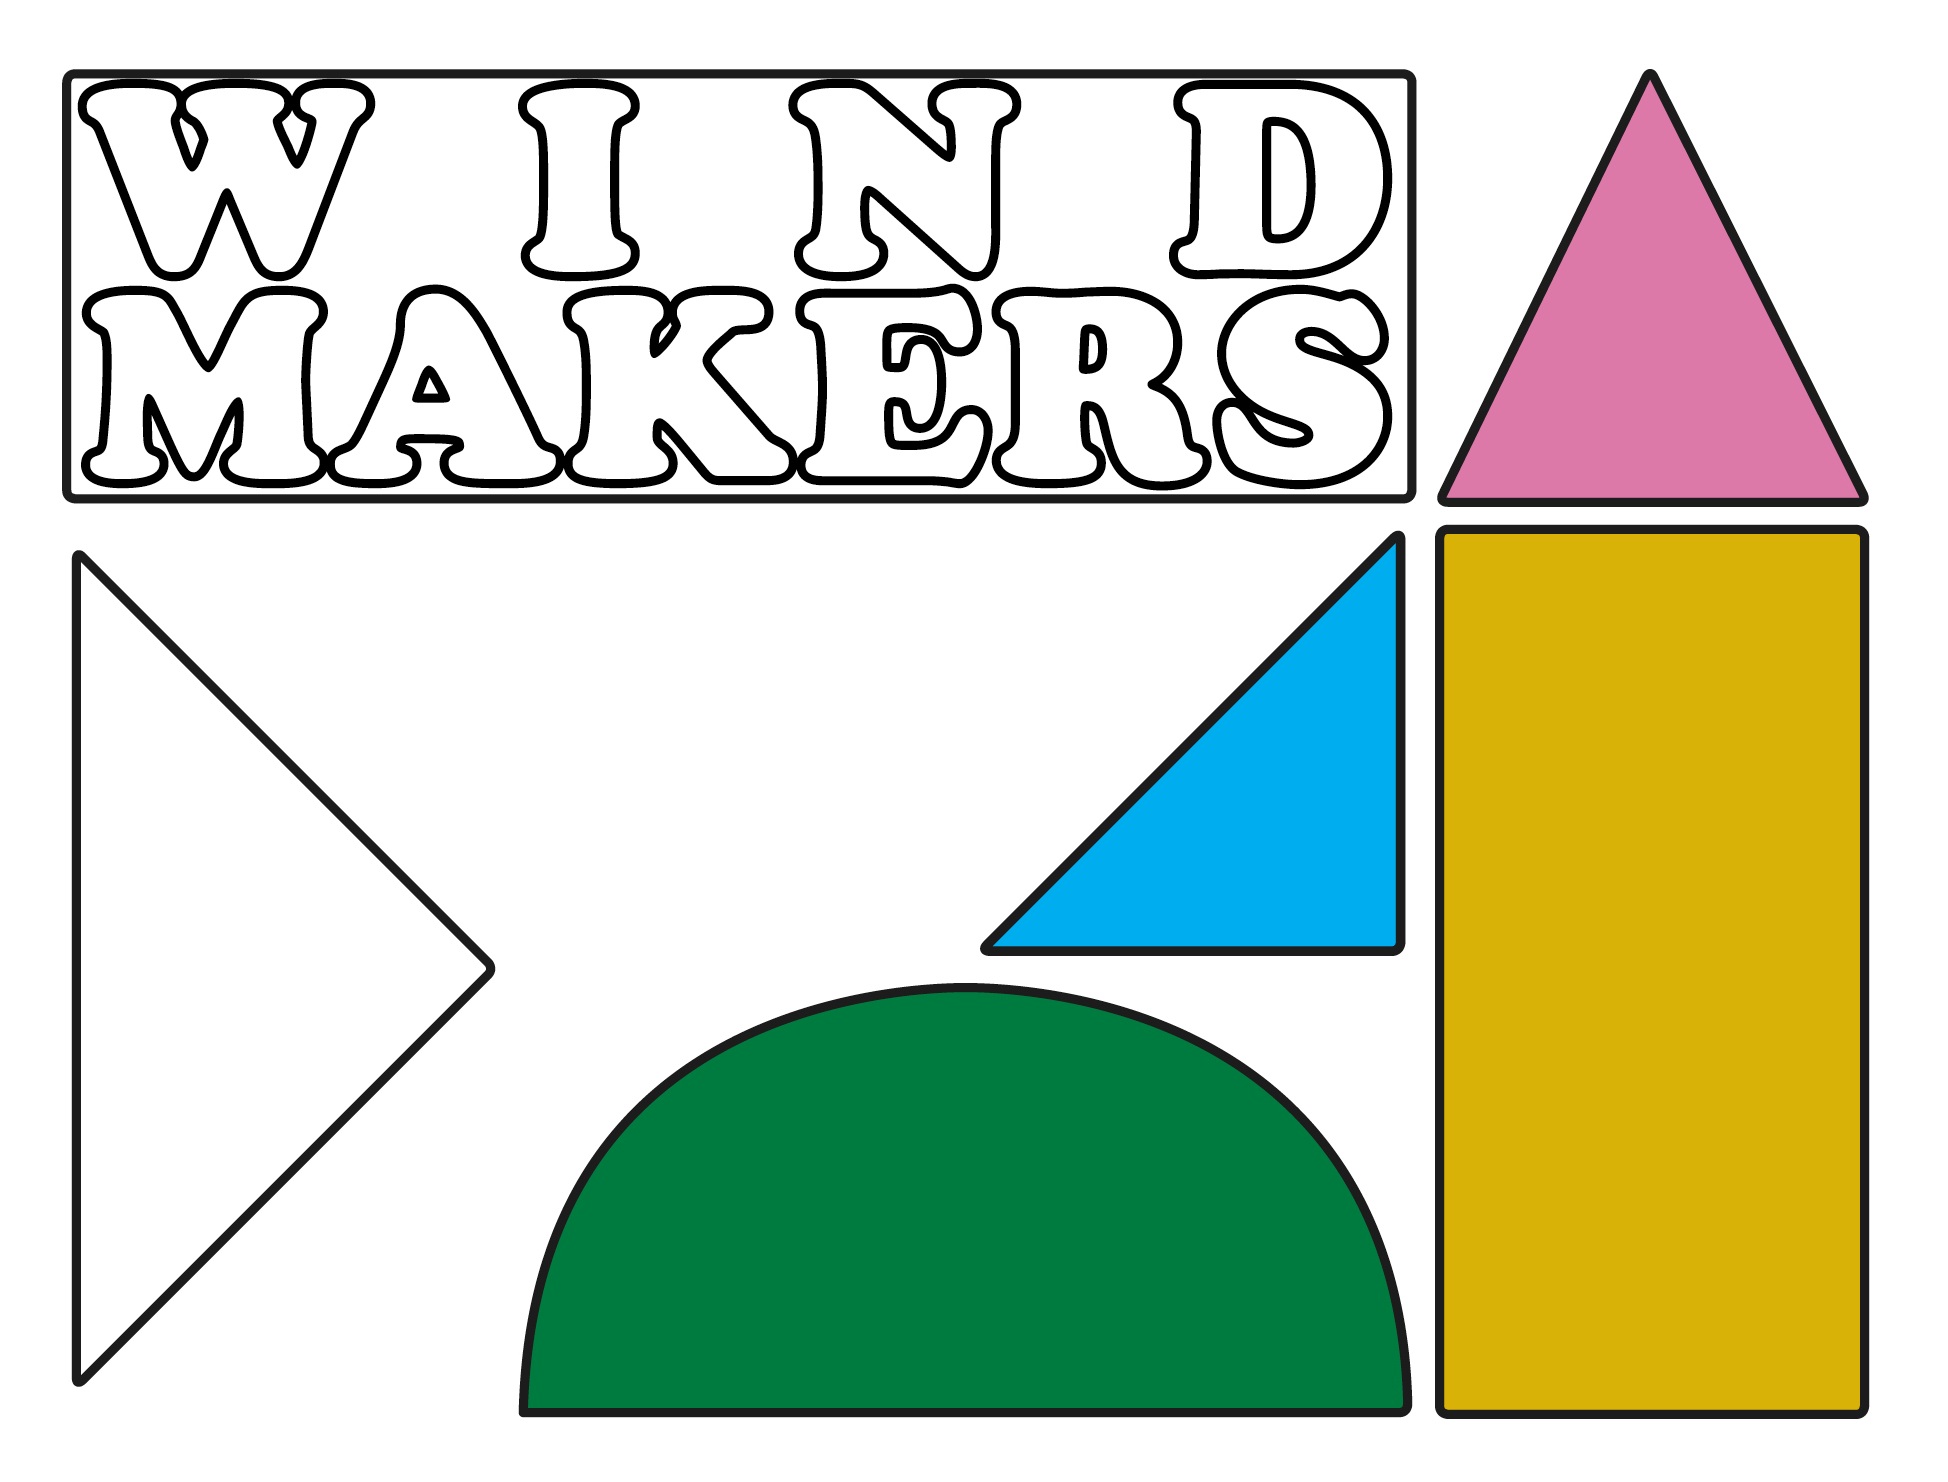 Windmakers